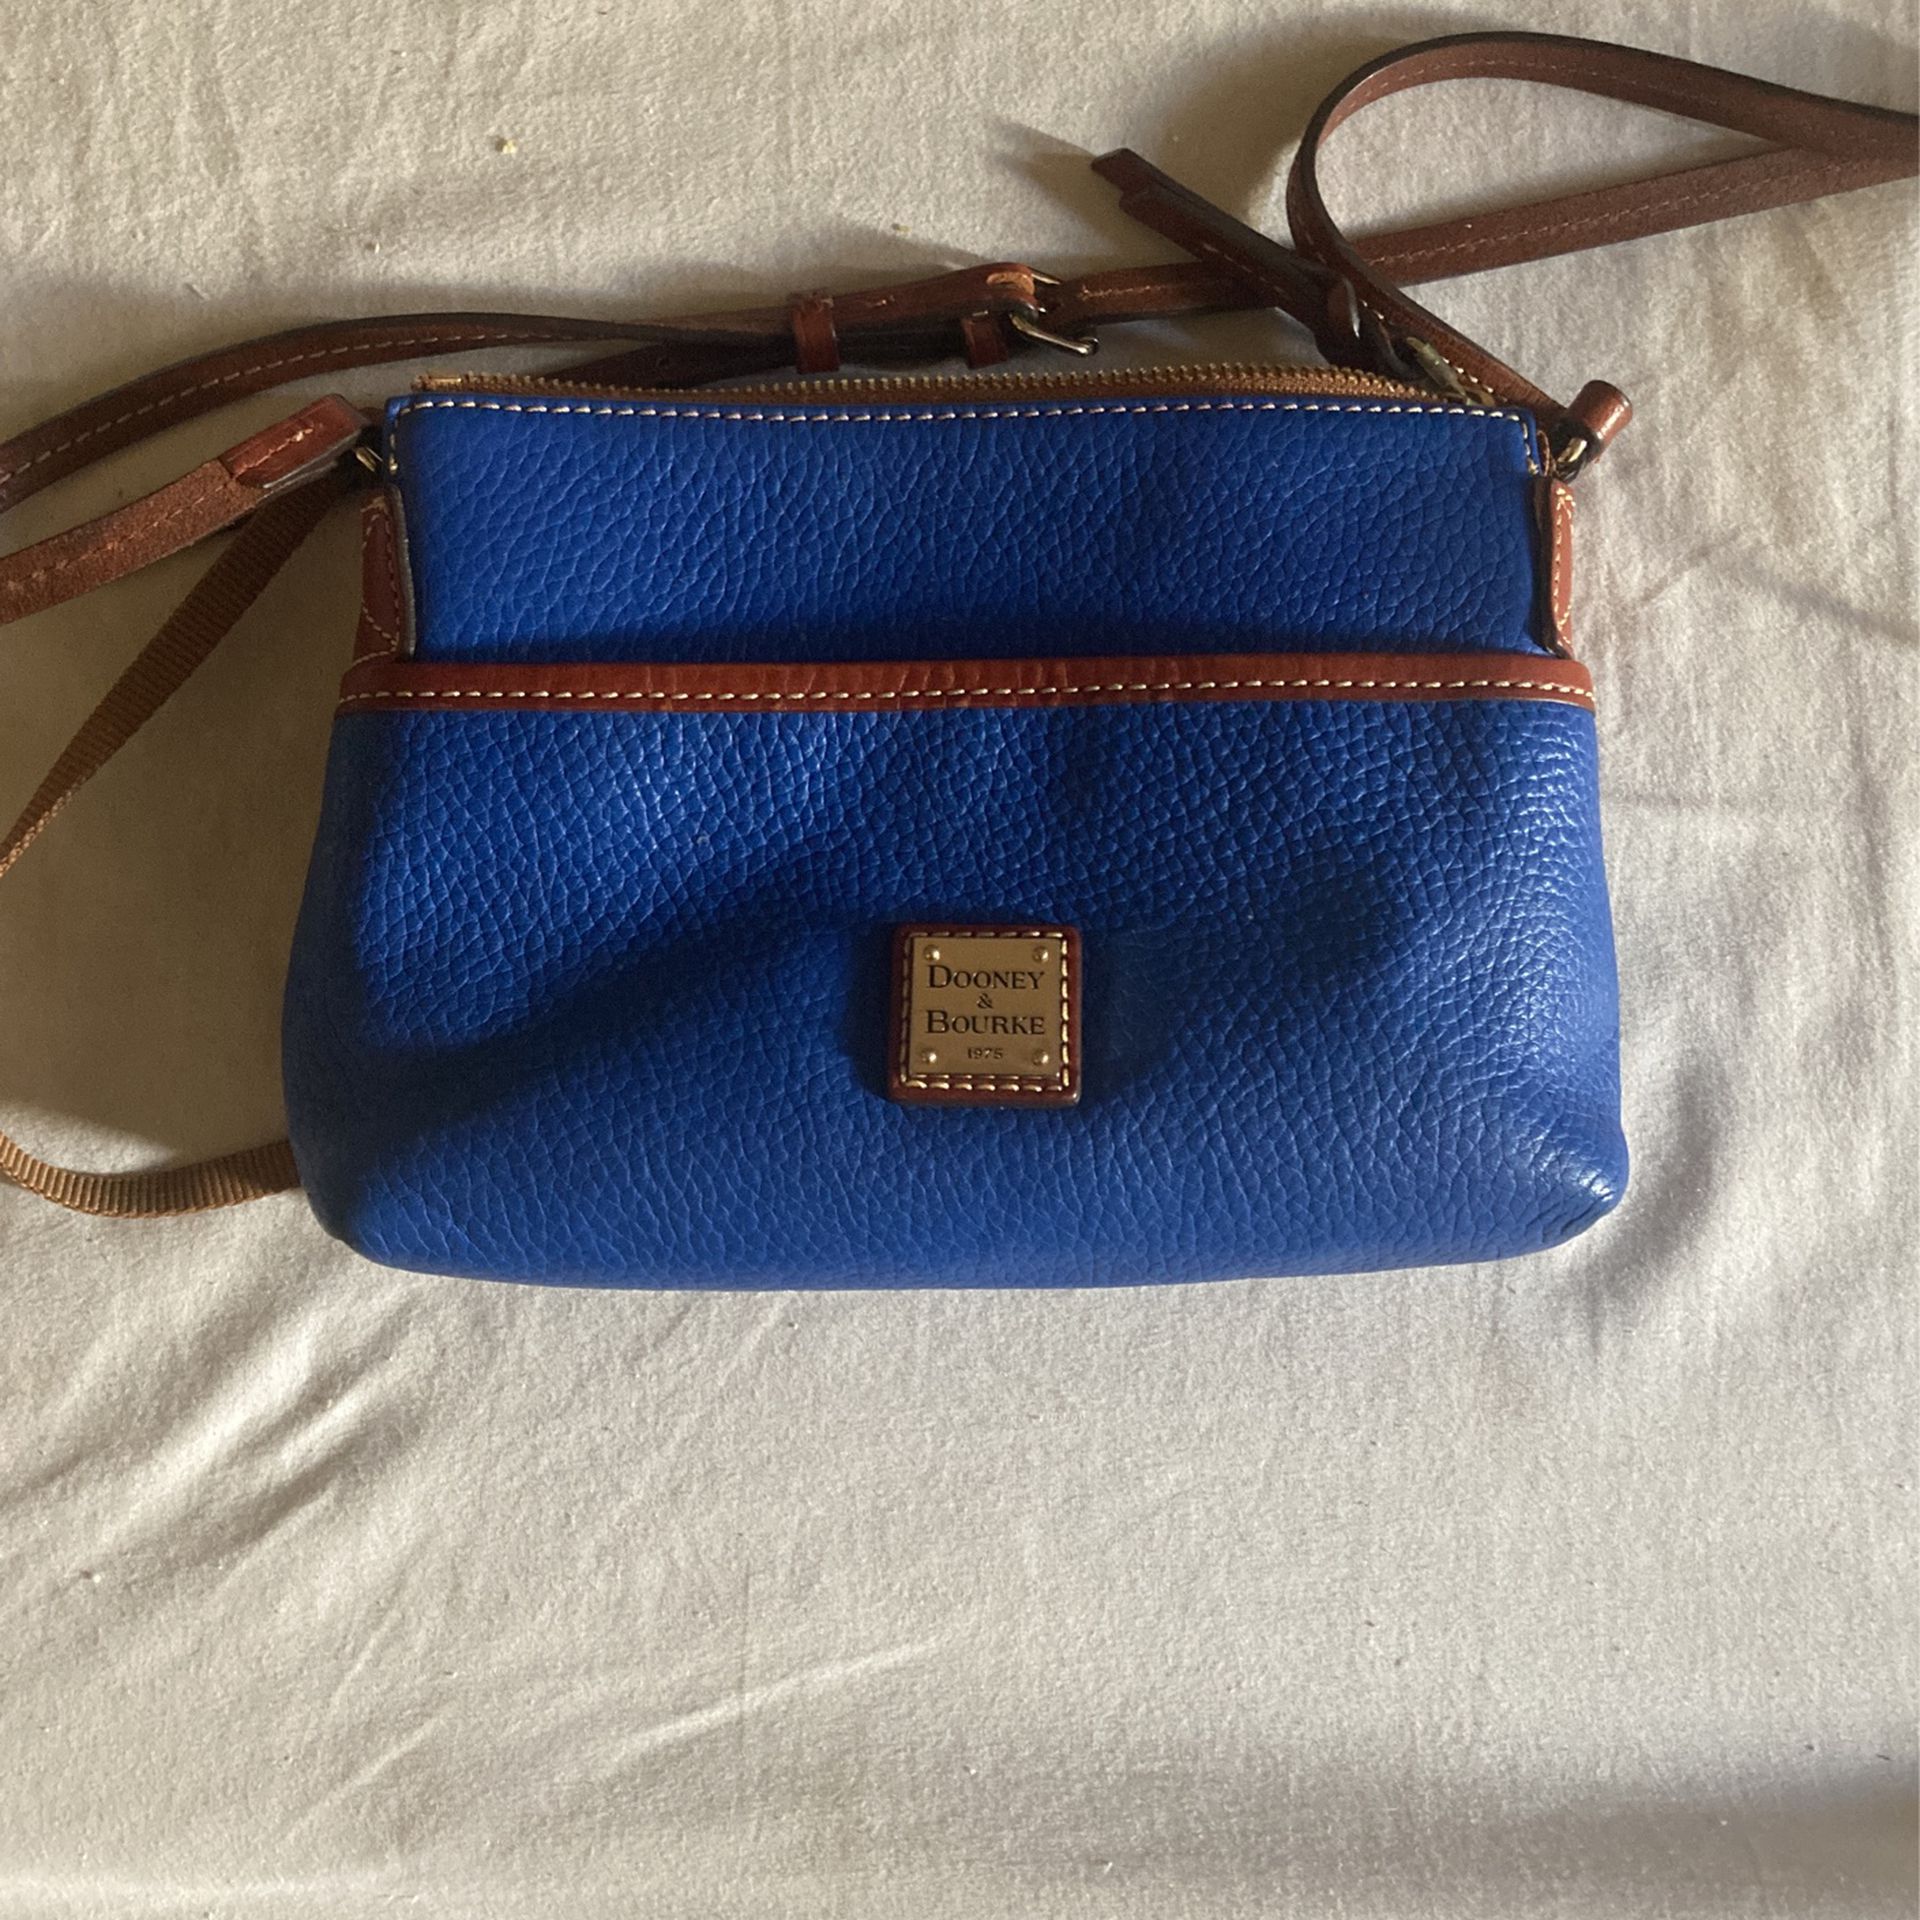 Genuine Dooney And Bourke Handbag Purse Royal Blue Red Interior Normal Use